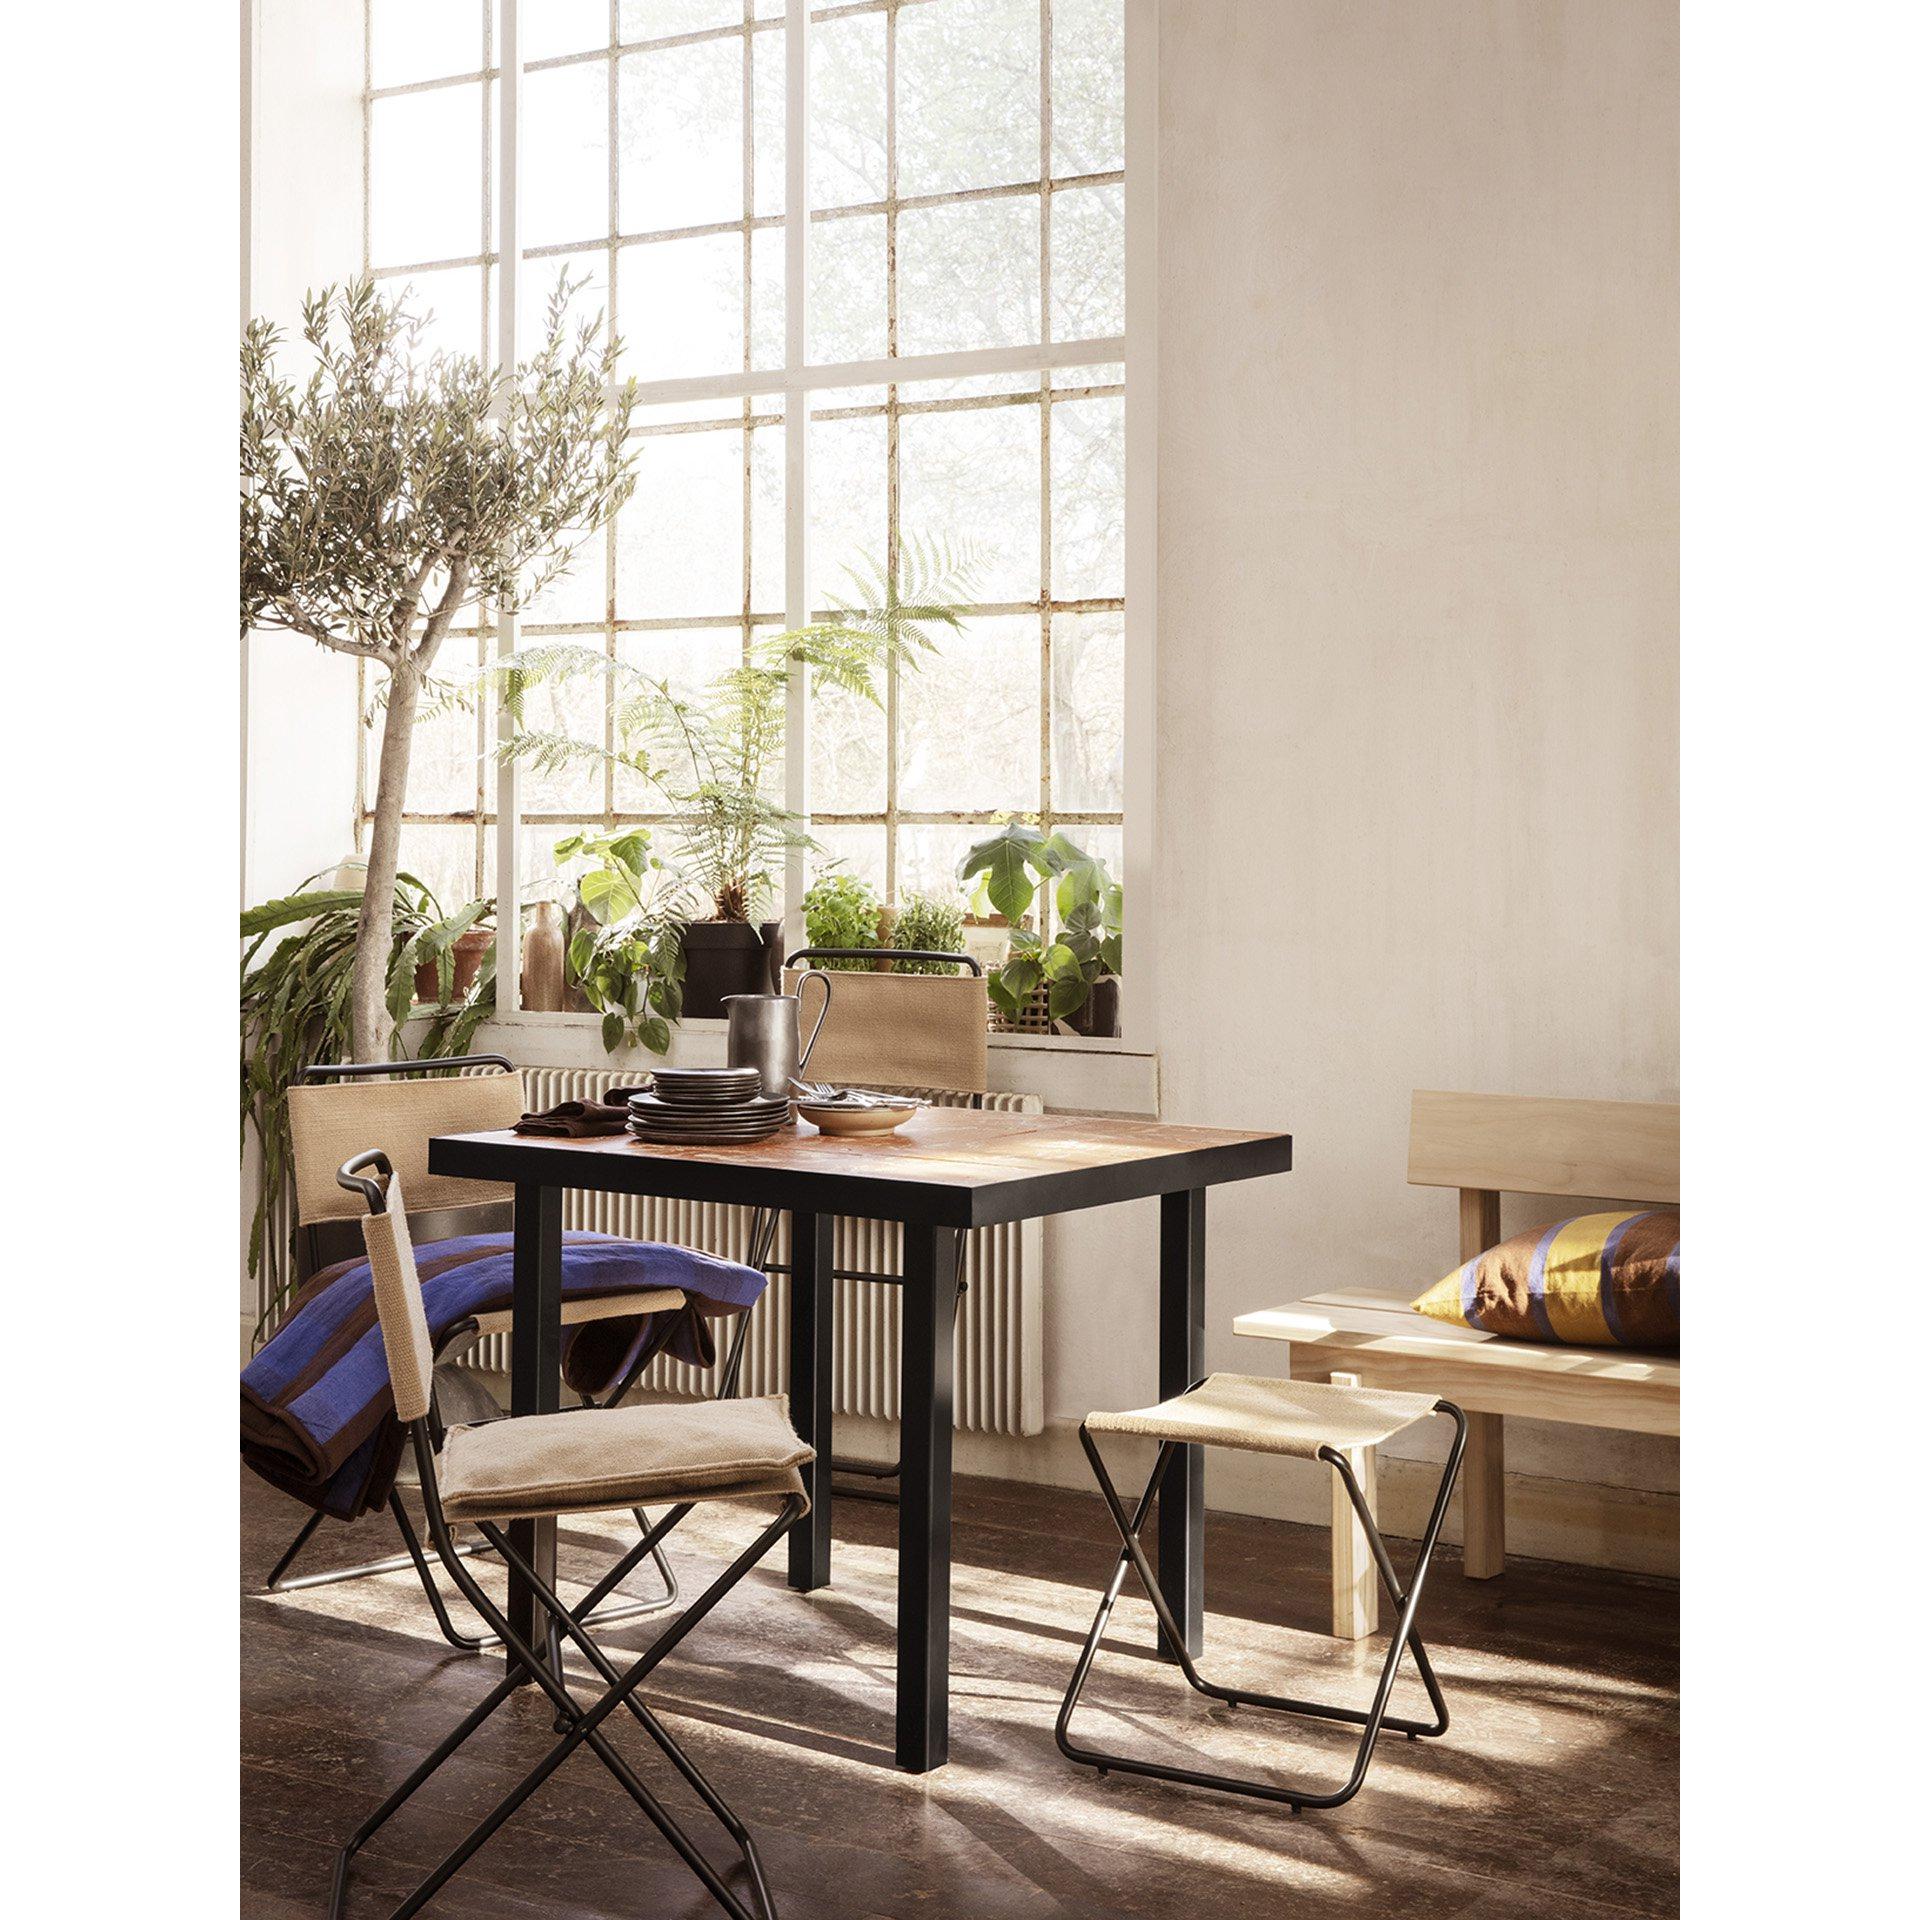 Ferm Living Flod Tiles Café Table, Terracotta/Black